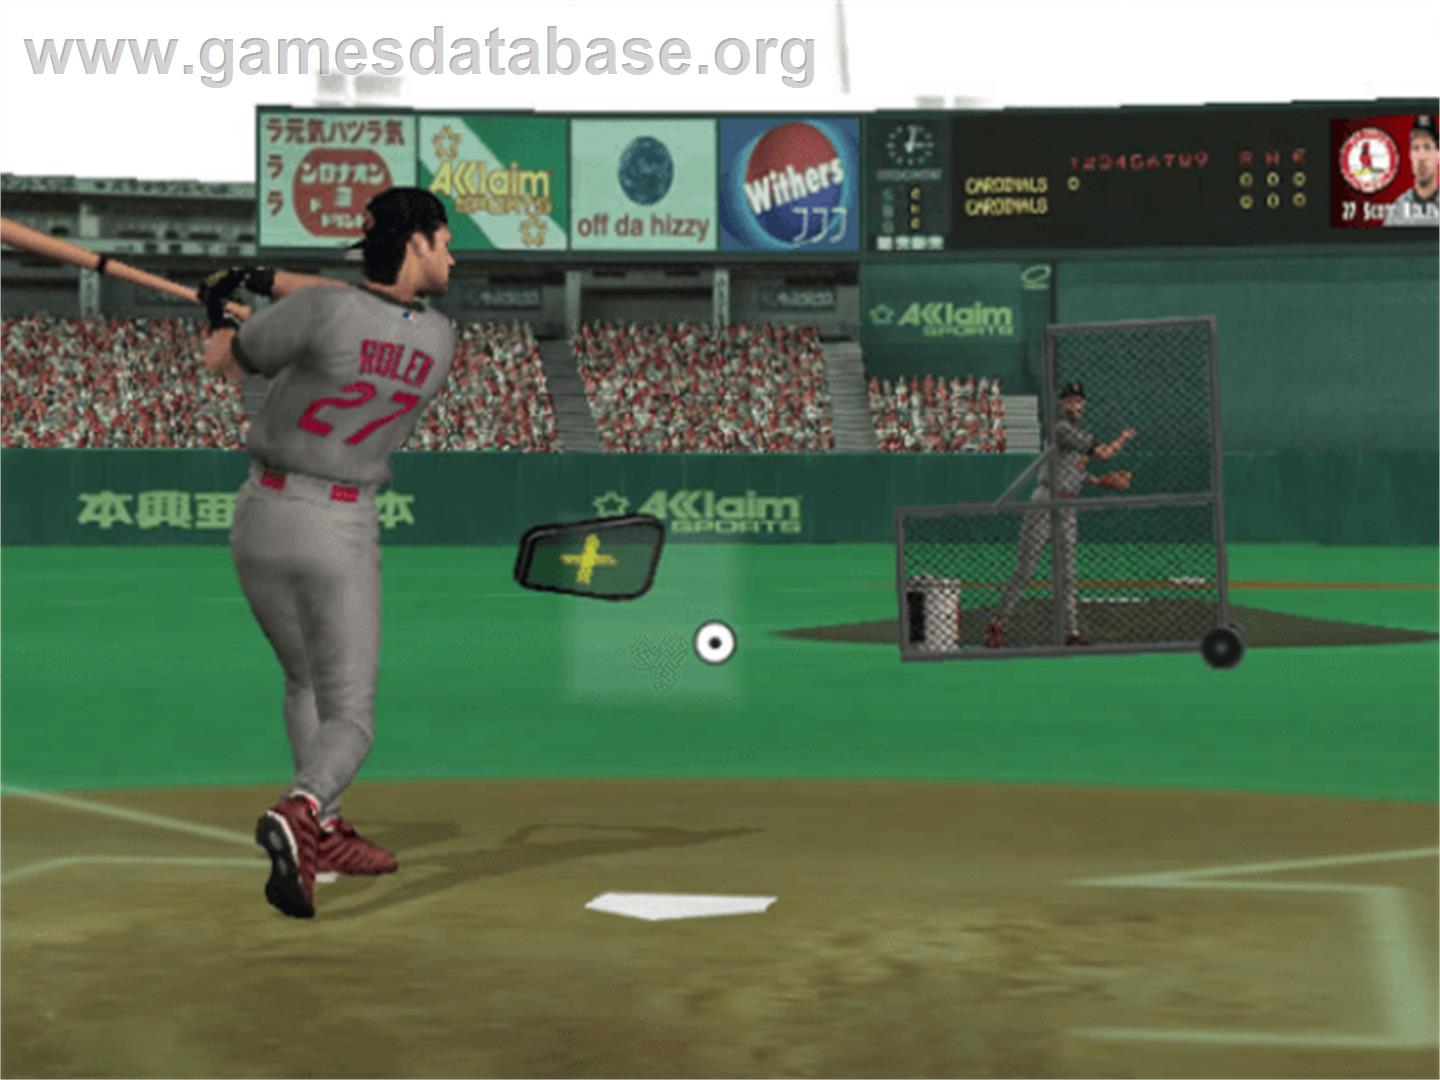 All-Star Baseball 2004 - Microsoft Xbox - Artwork - In Game